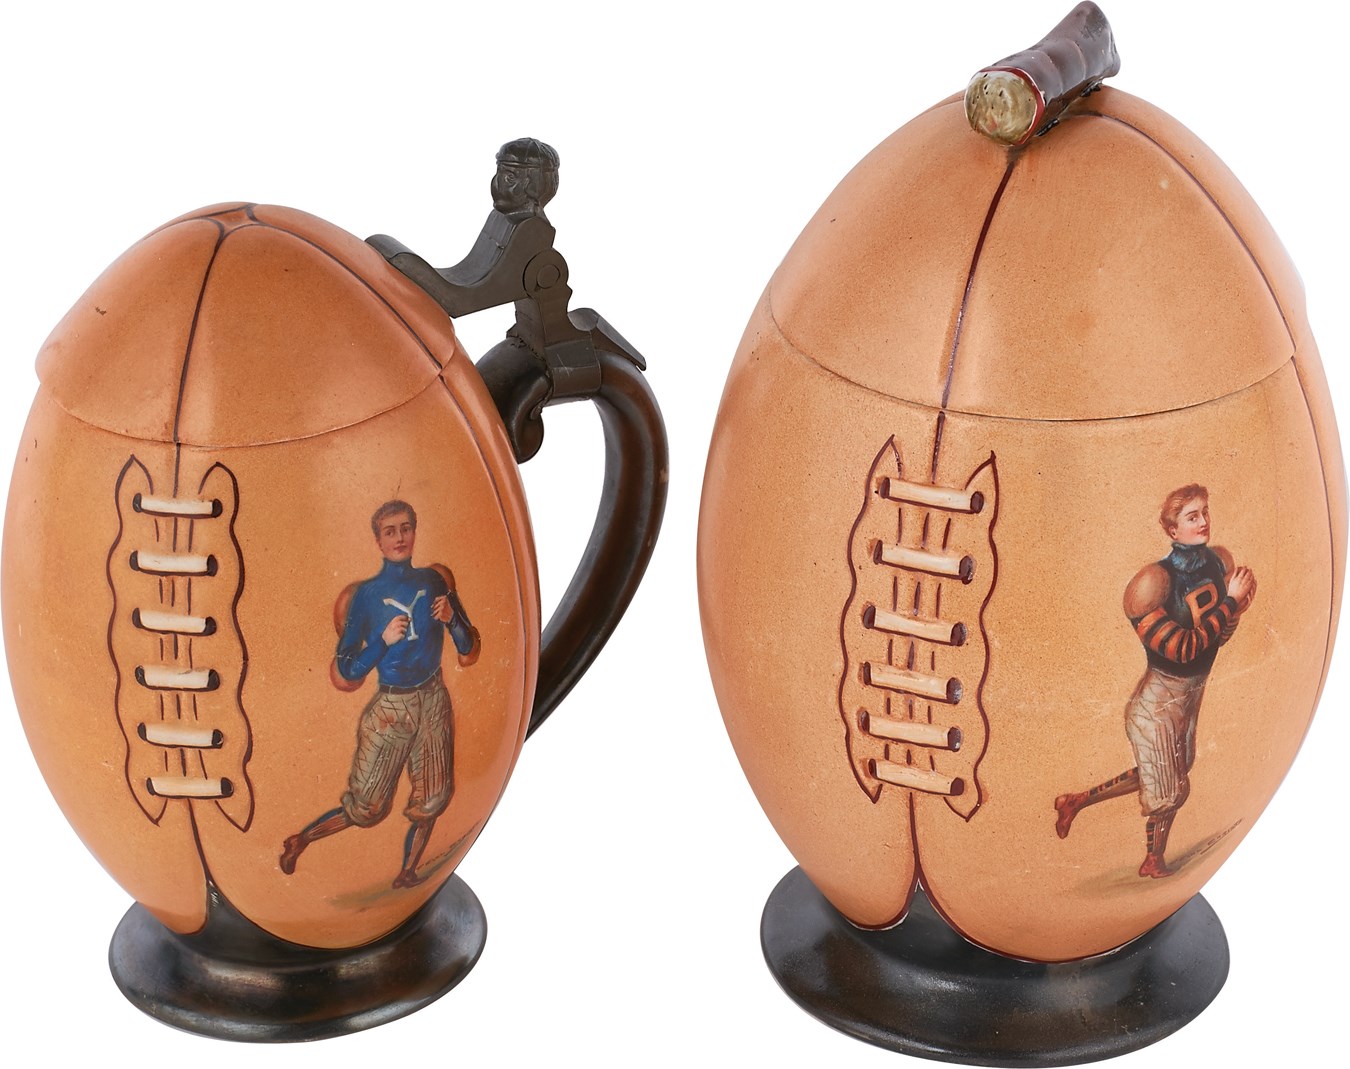 - Extremely Rare Early 1900s Figural Football Cigar Humidor with Matching Lidded Mug